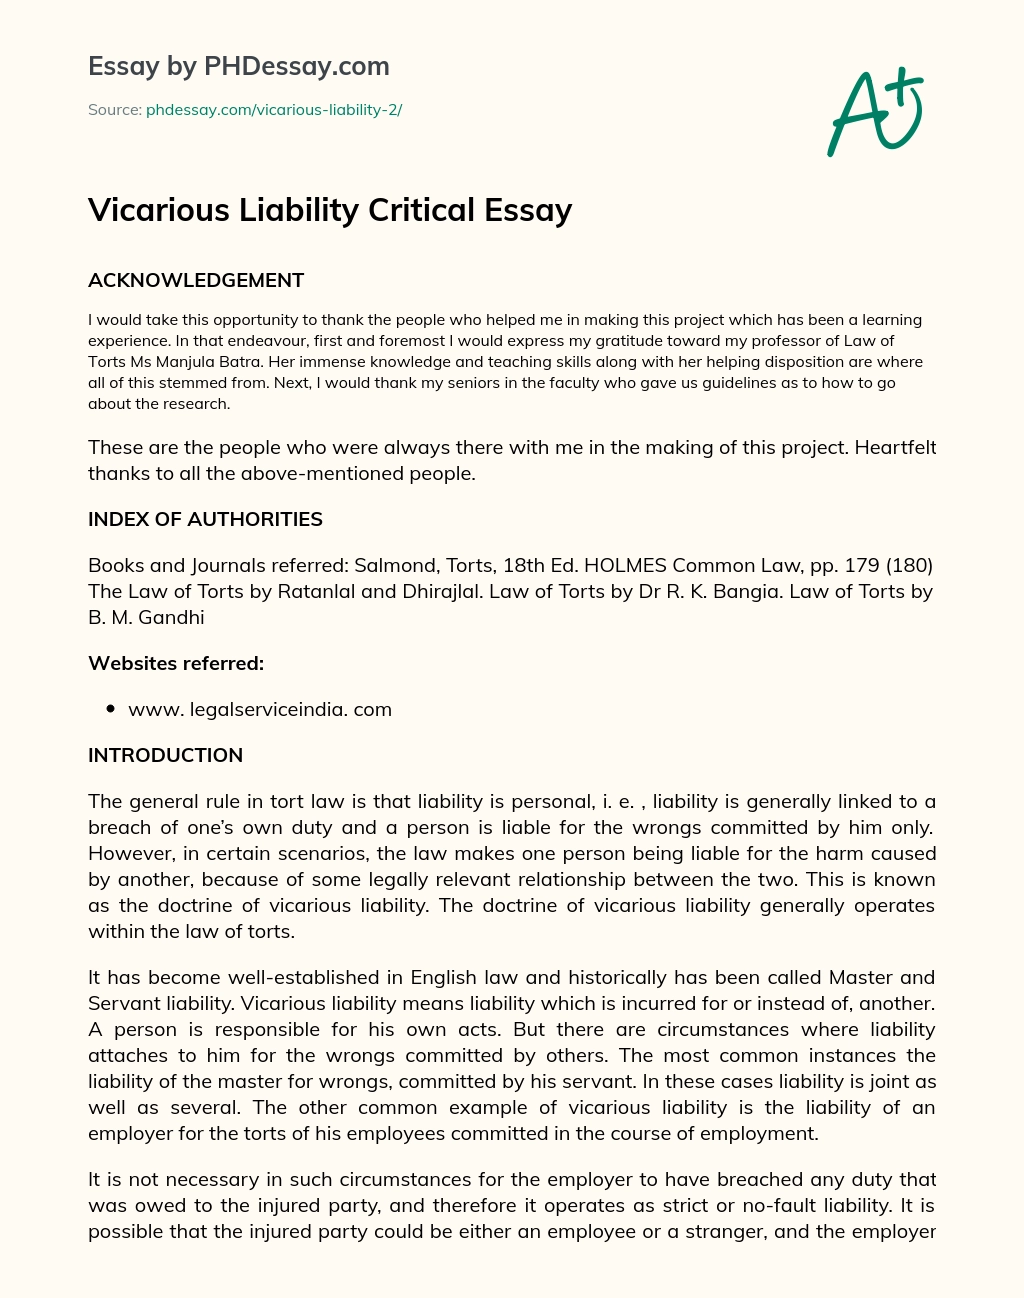 Vicarious Liability Critical Essay essay